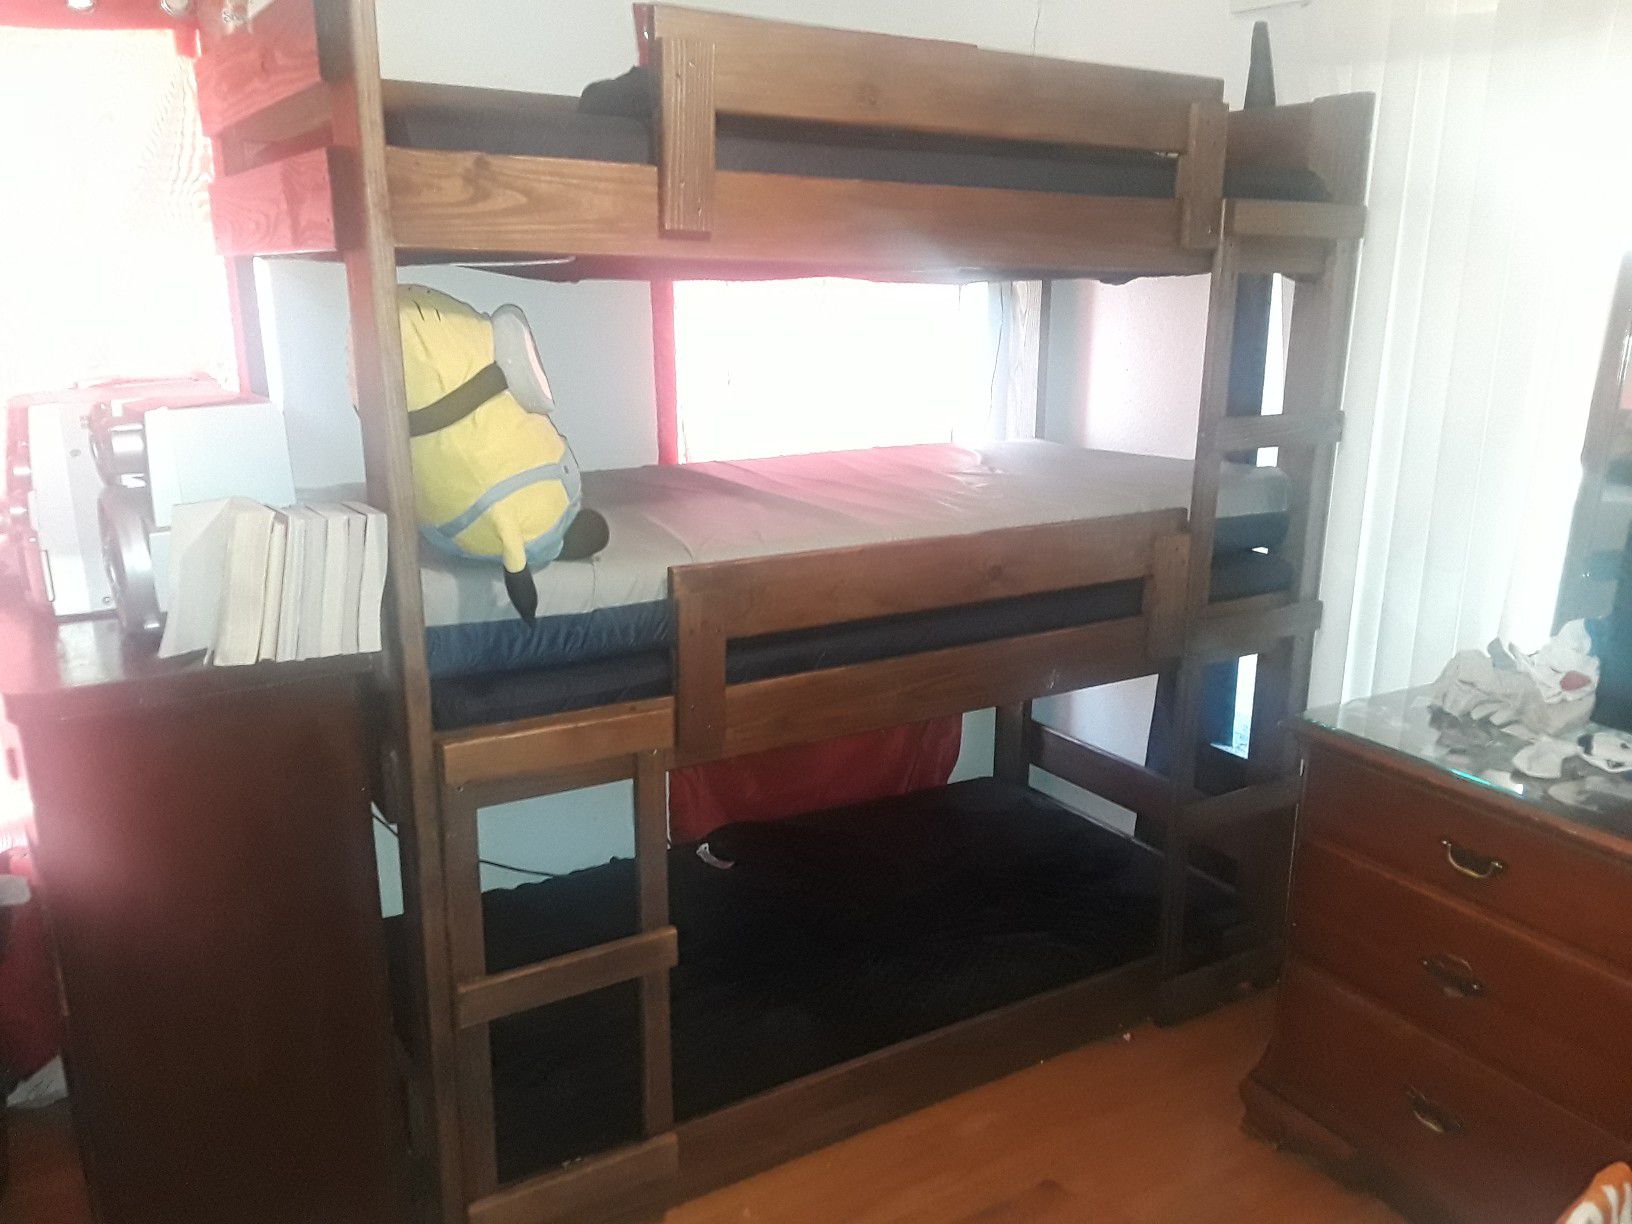 3 layer bunk beds